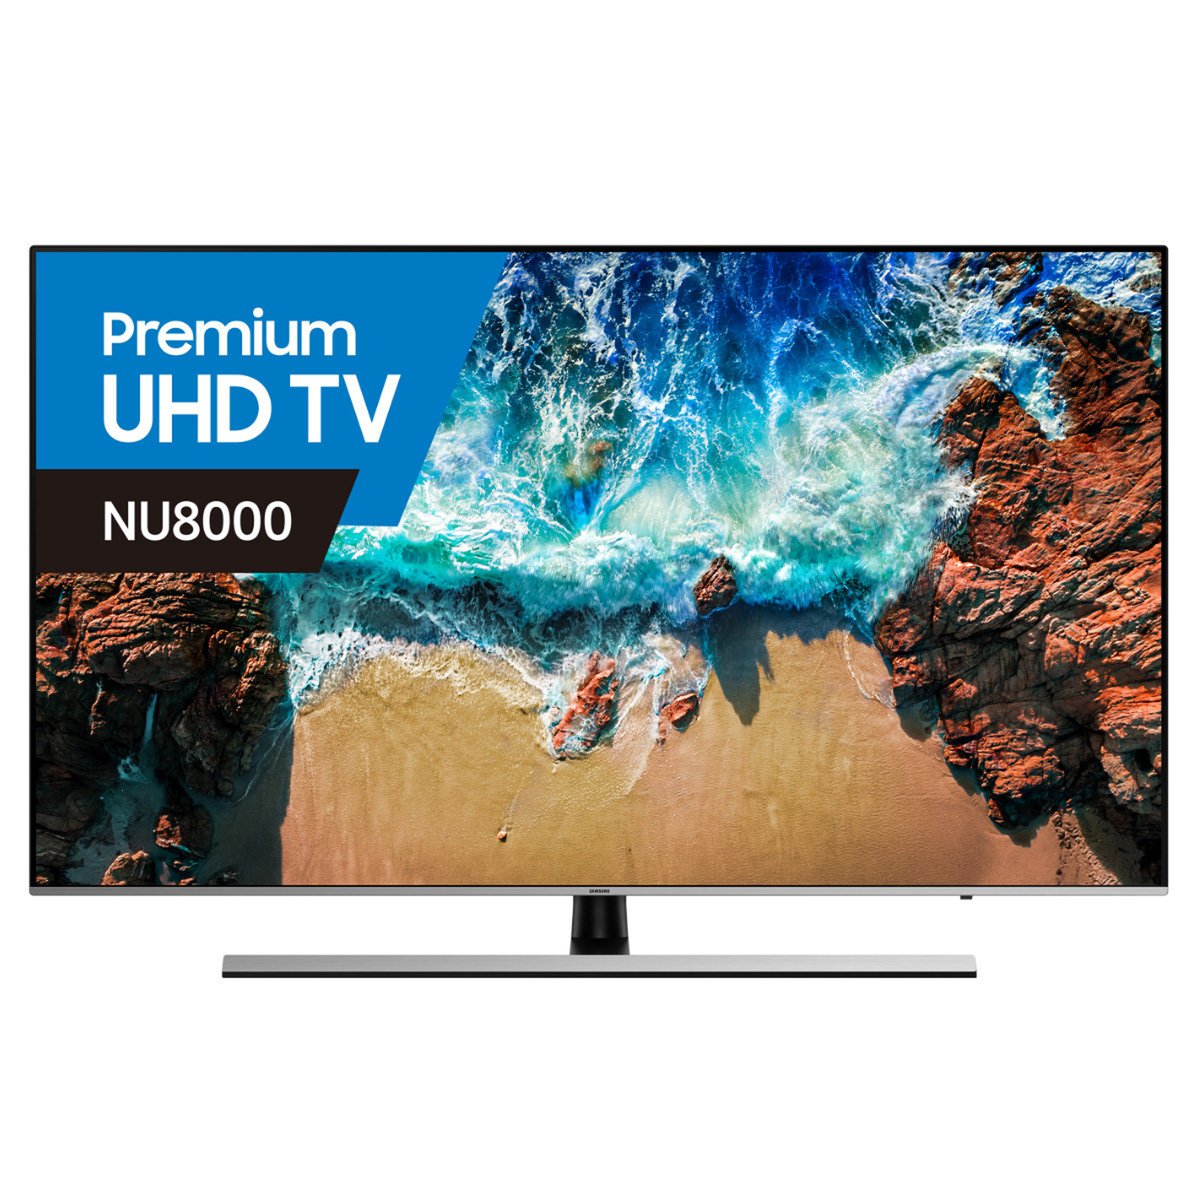 Samsung Premium 4K Ultra HD Smart LED TV UA75NU8000 75inch